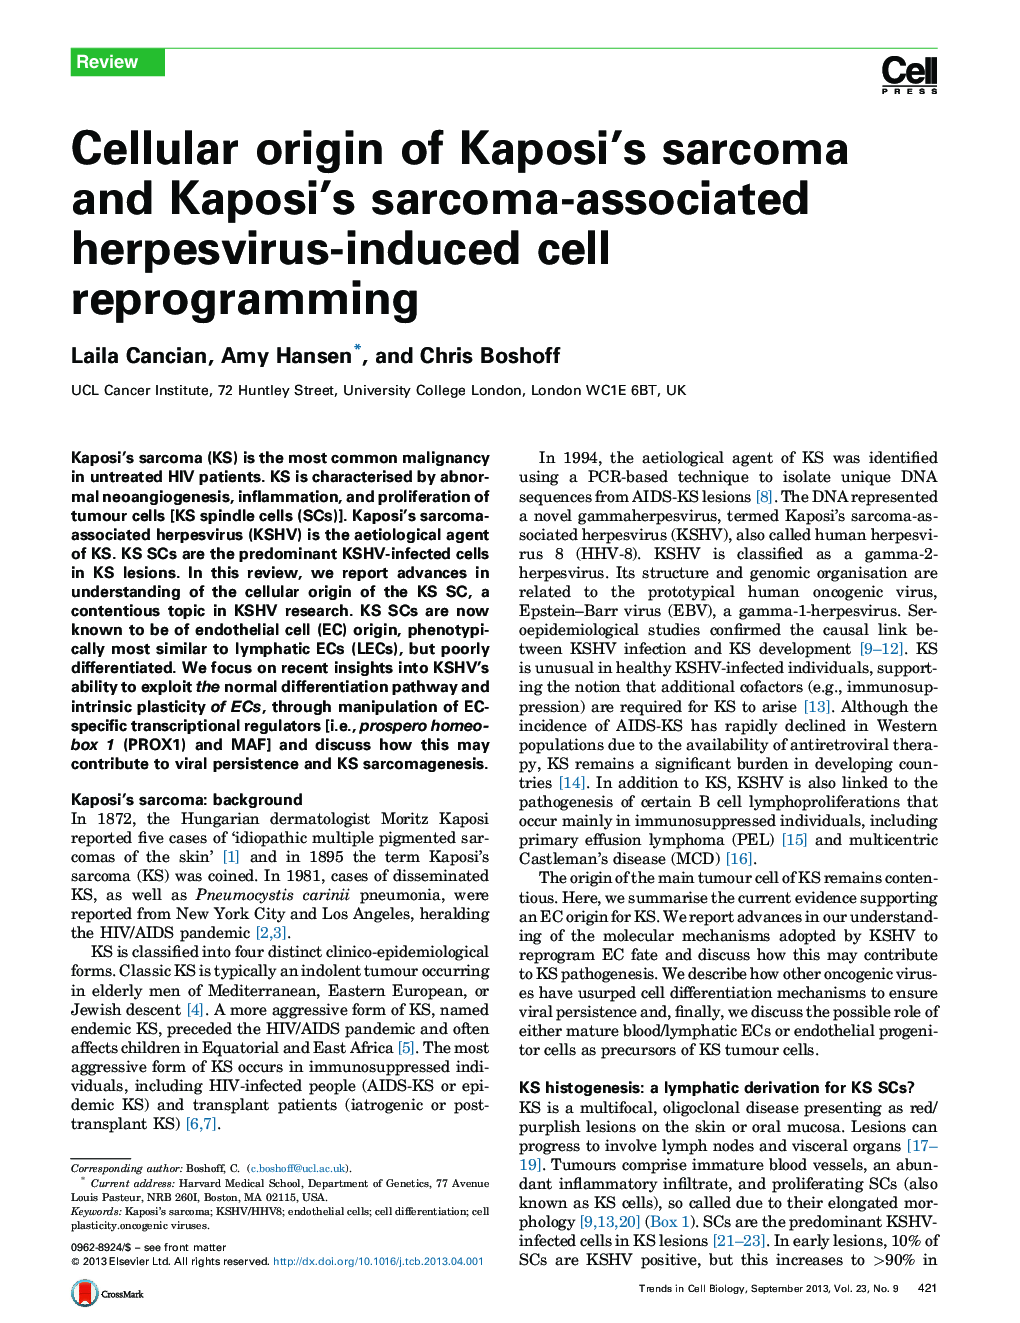 Cellular origin of Kaposi's sarcoma and Kaposi's sarcoma-associated herpesvirus-induced cell reprogramming